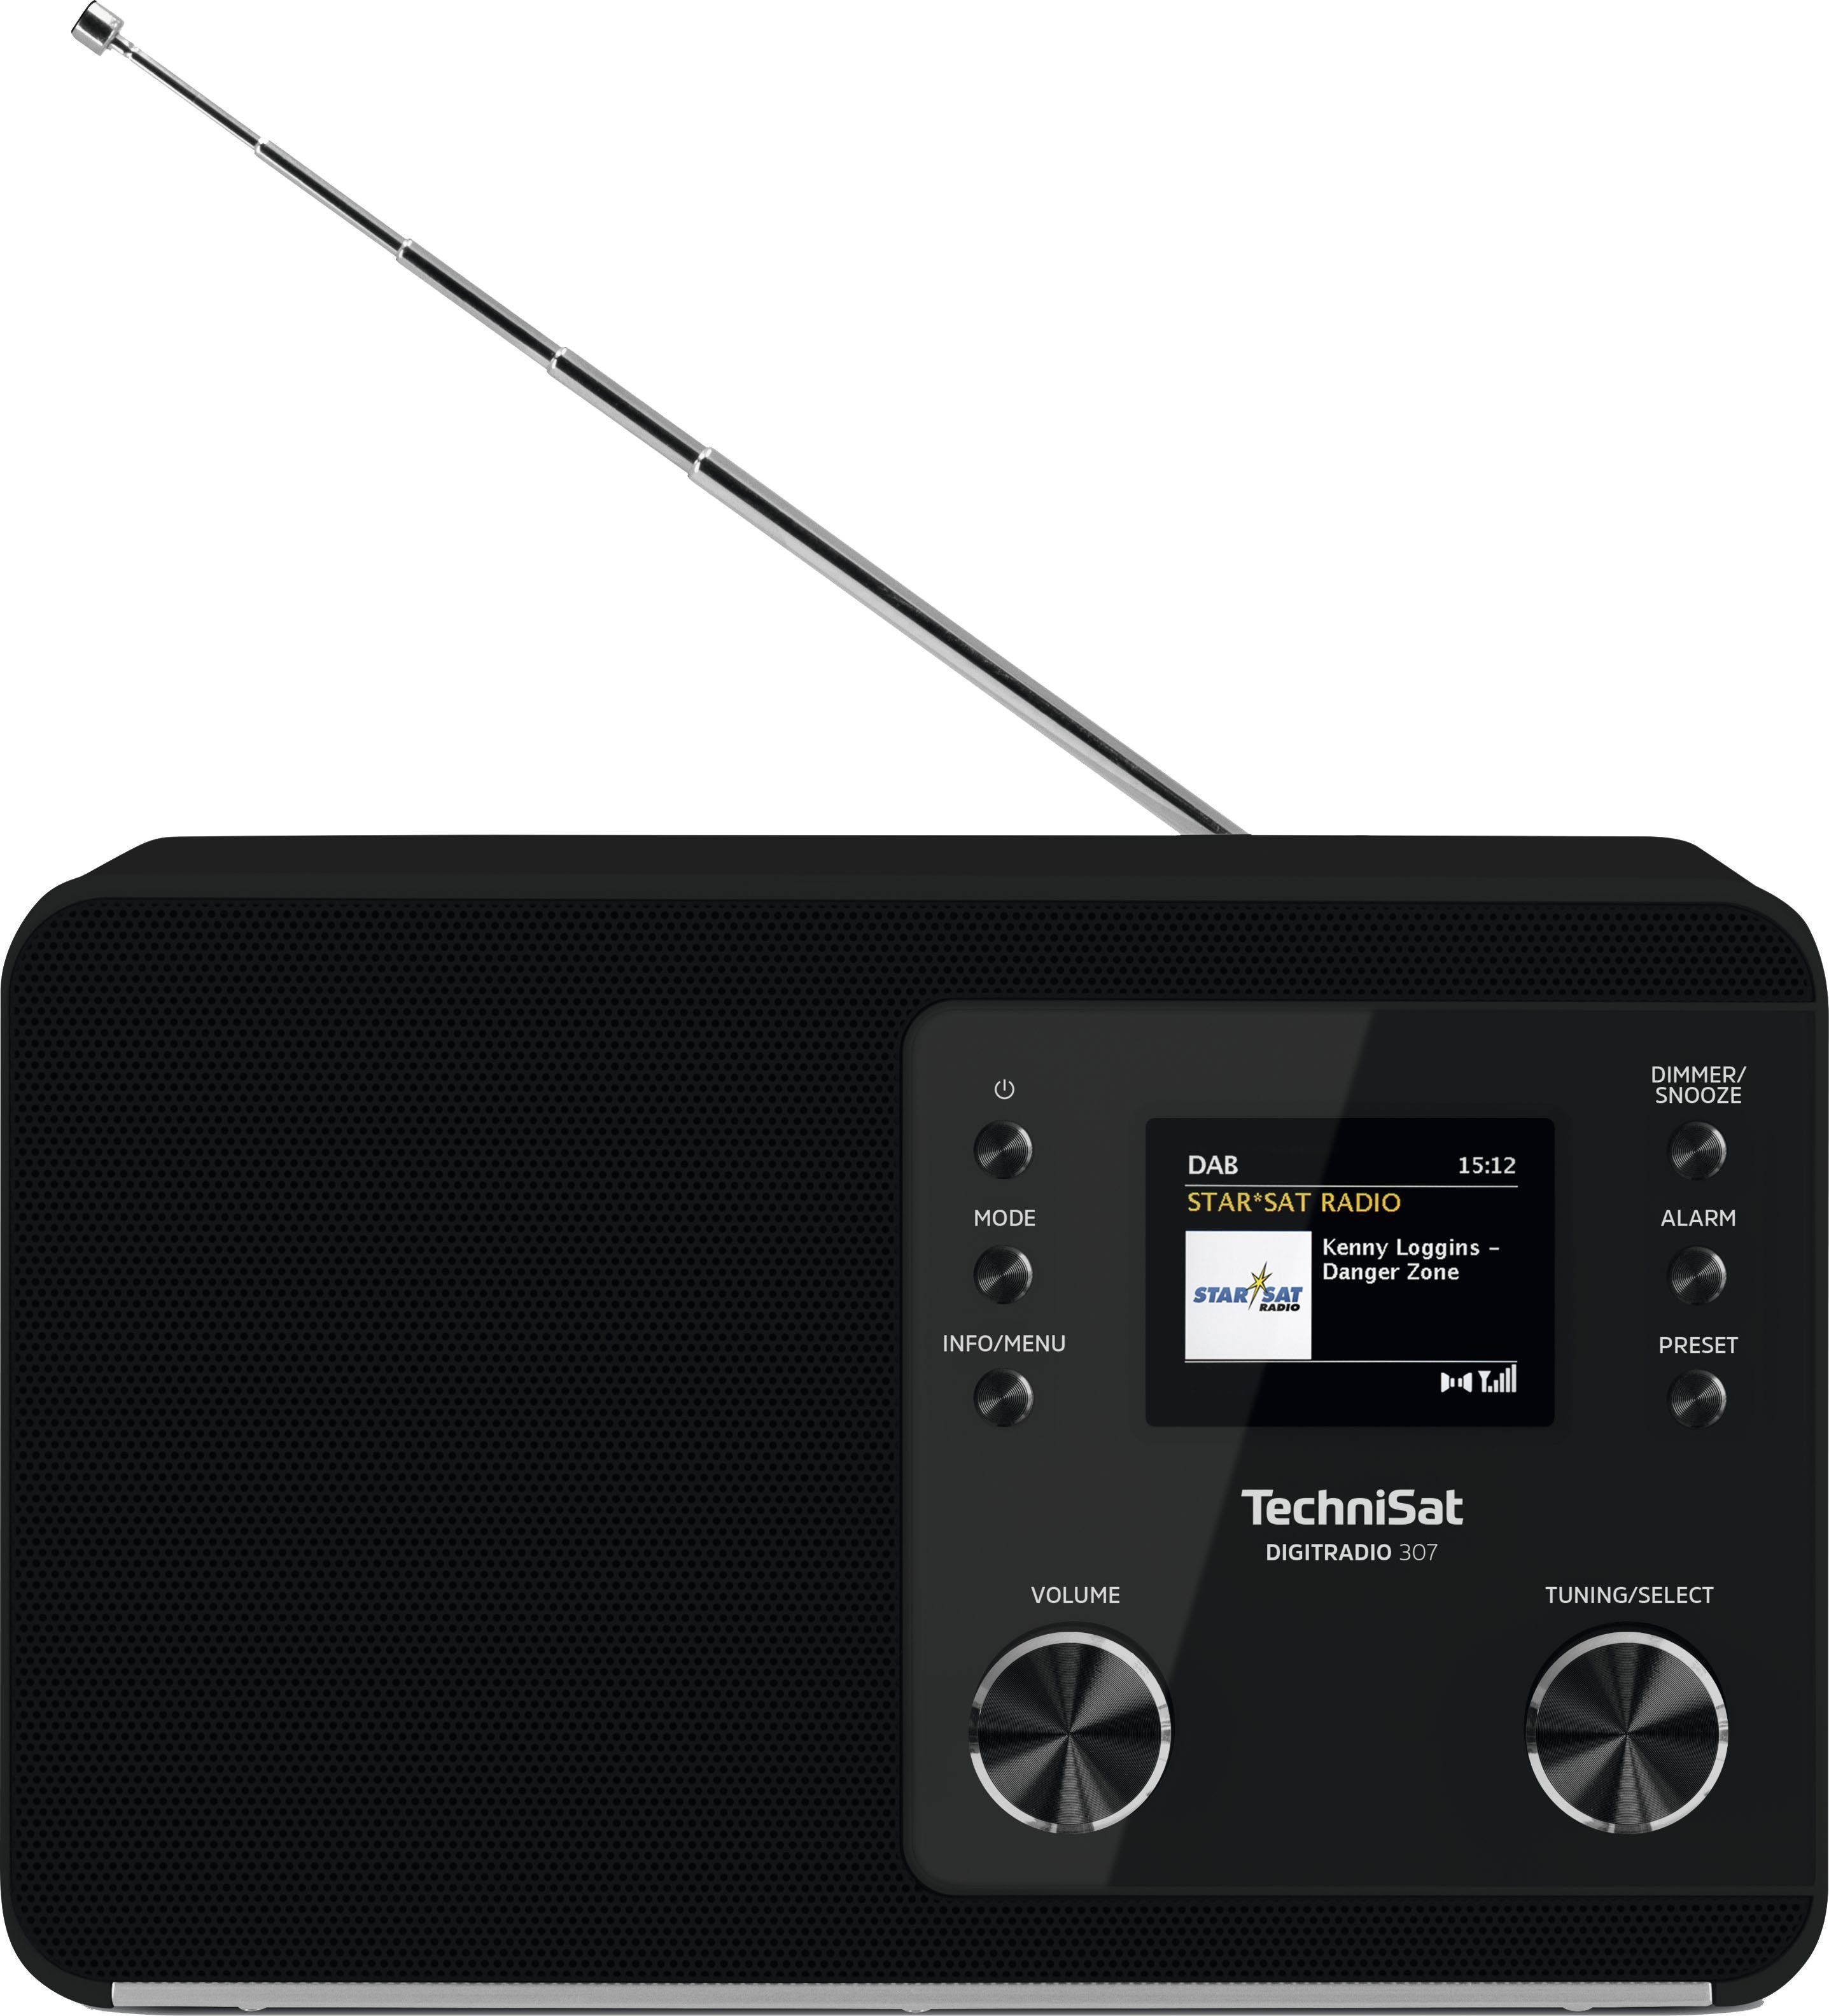 TechniSat Digitradio 307 Digitalradio (DAB) (Digitalradio (DAB), UKW mit RDS,  5 W), 5 W (RMS) Monolautsprecher, Aux-Eingang, Kopfhöreranschluss